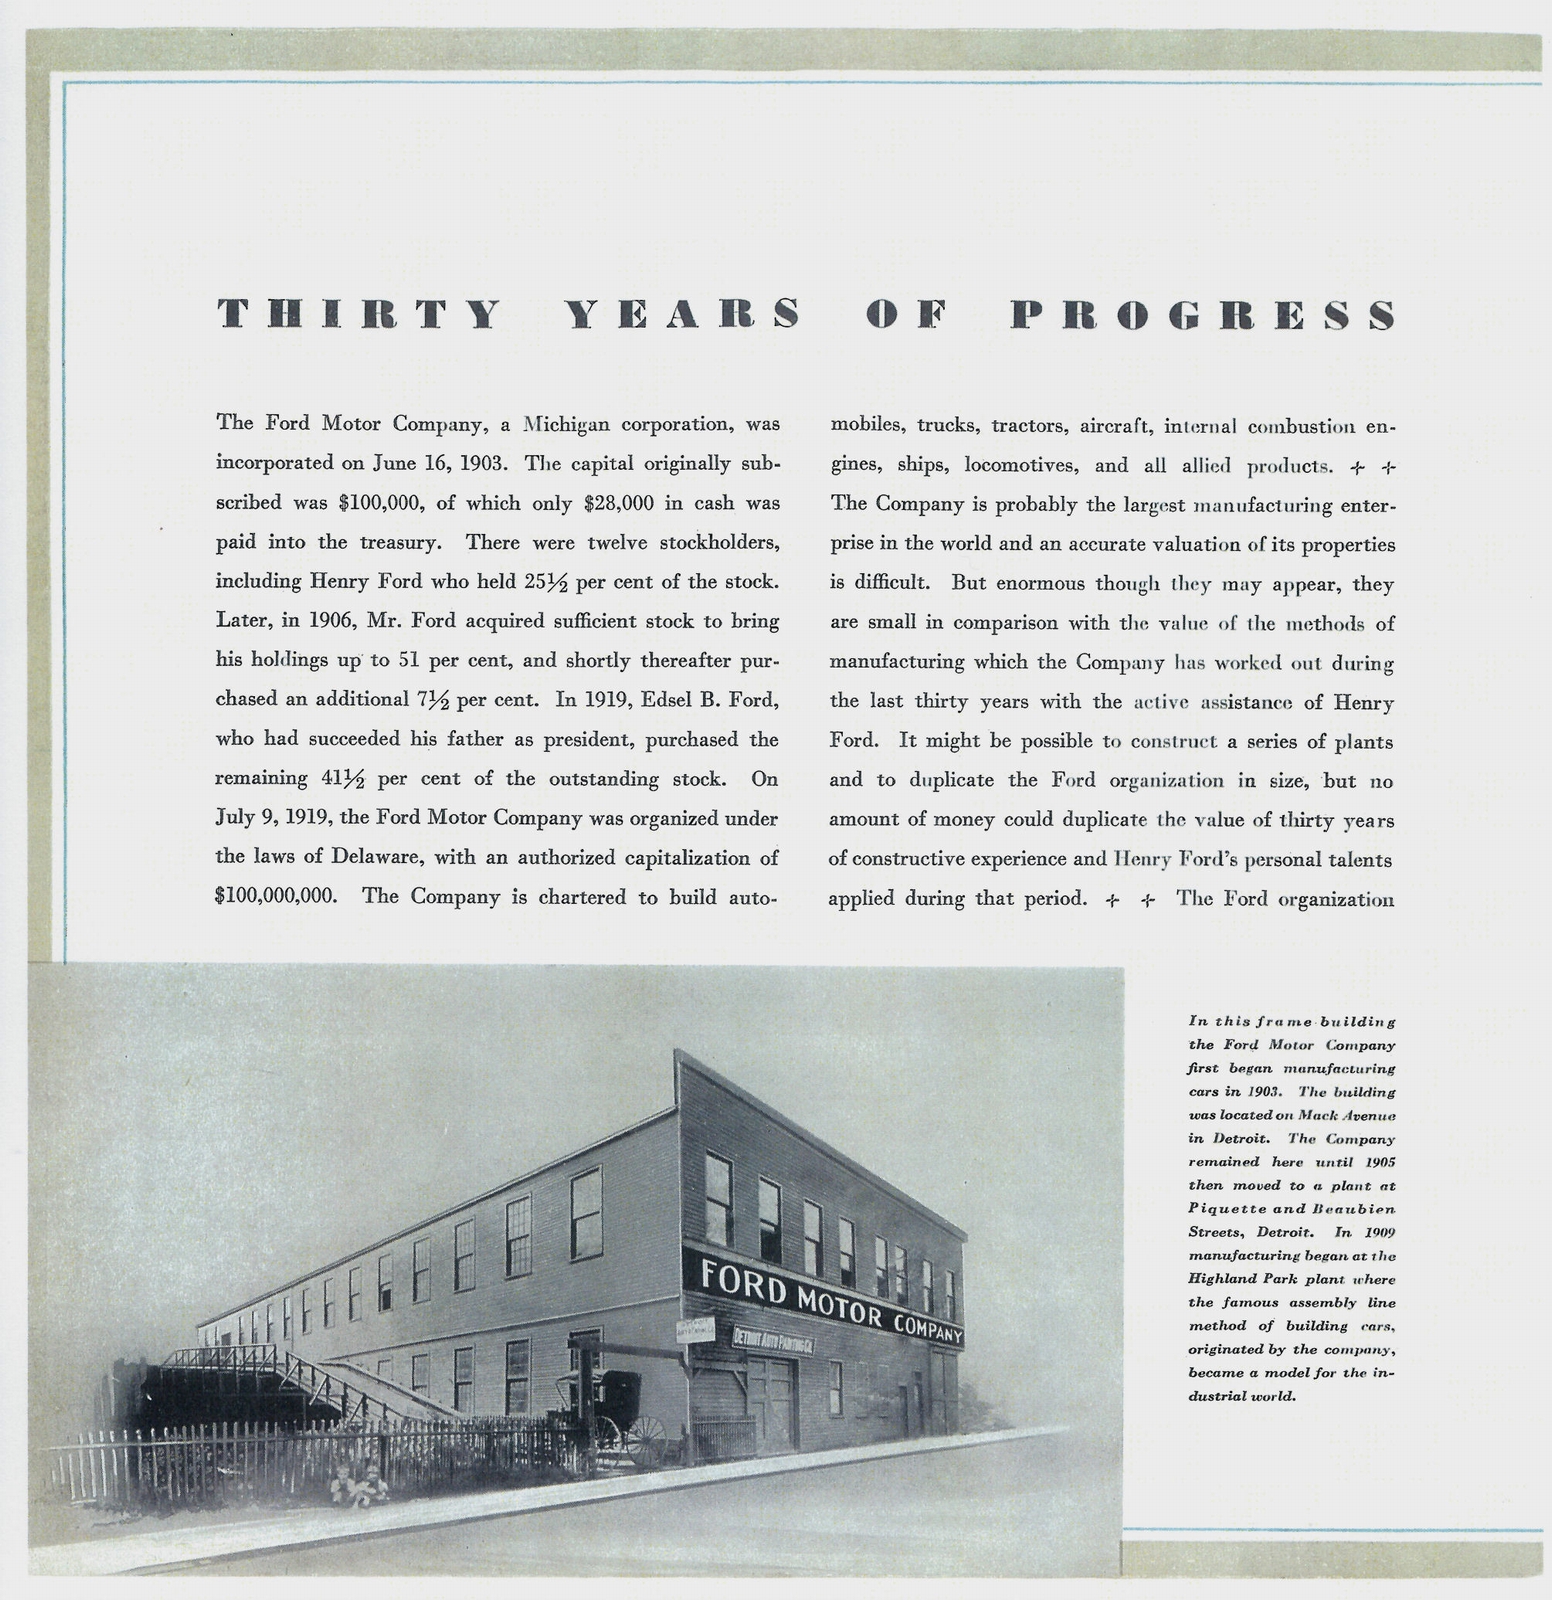 n_1933 FMC - 30 Years of Progress-05.jpg